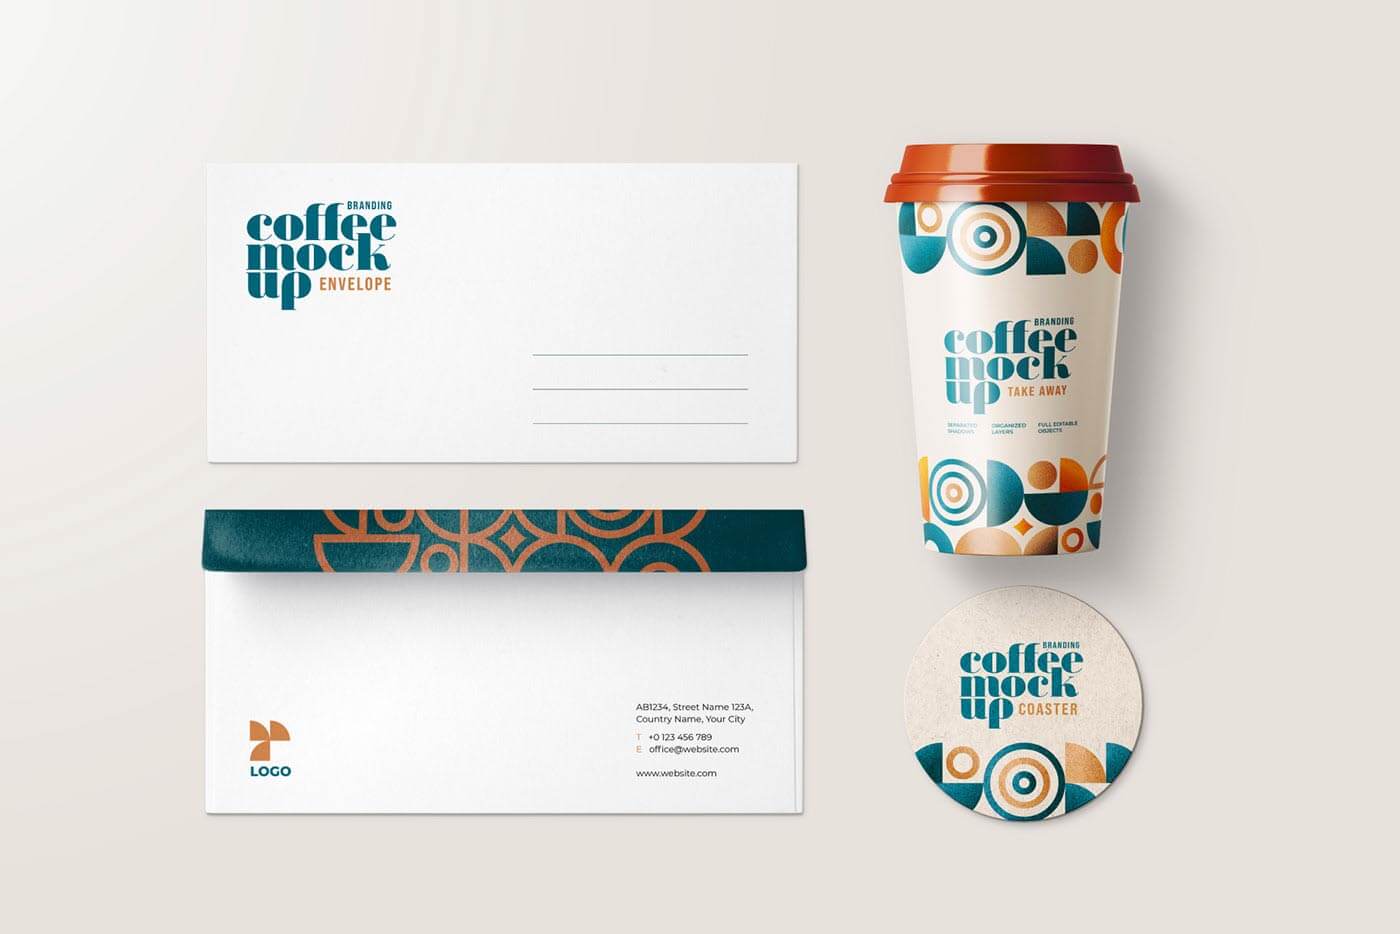 Free Branding Coffee Set Mockup (PSD)